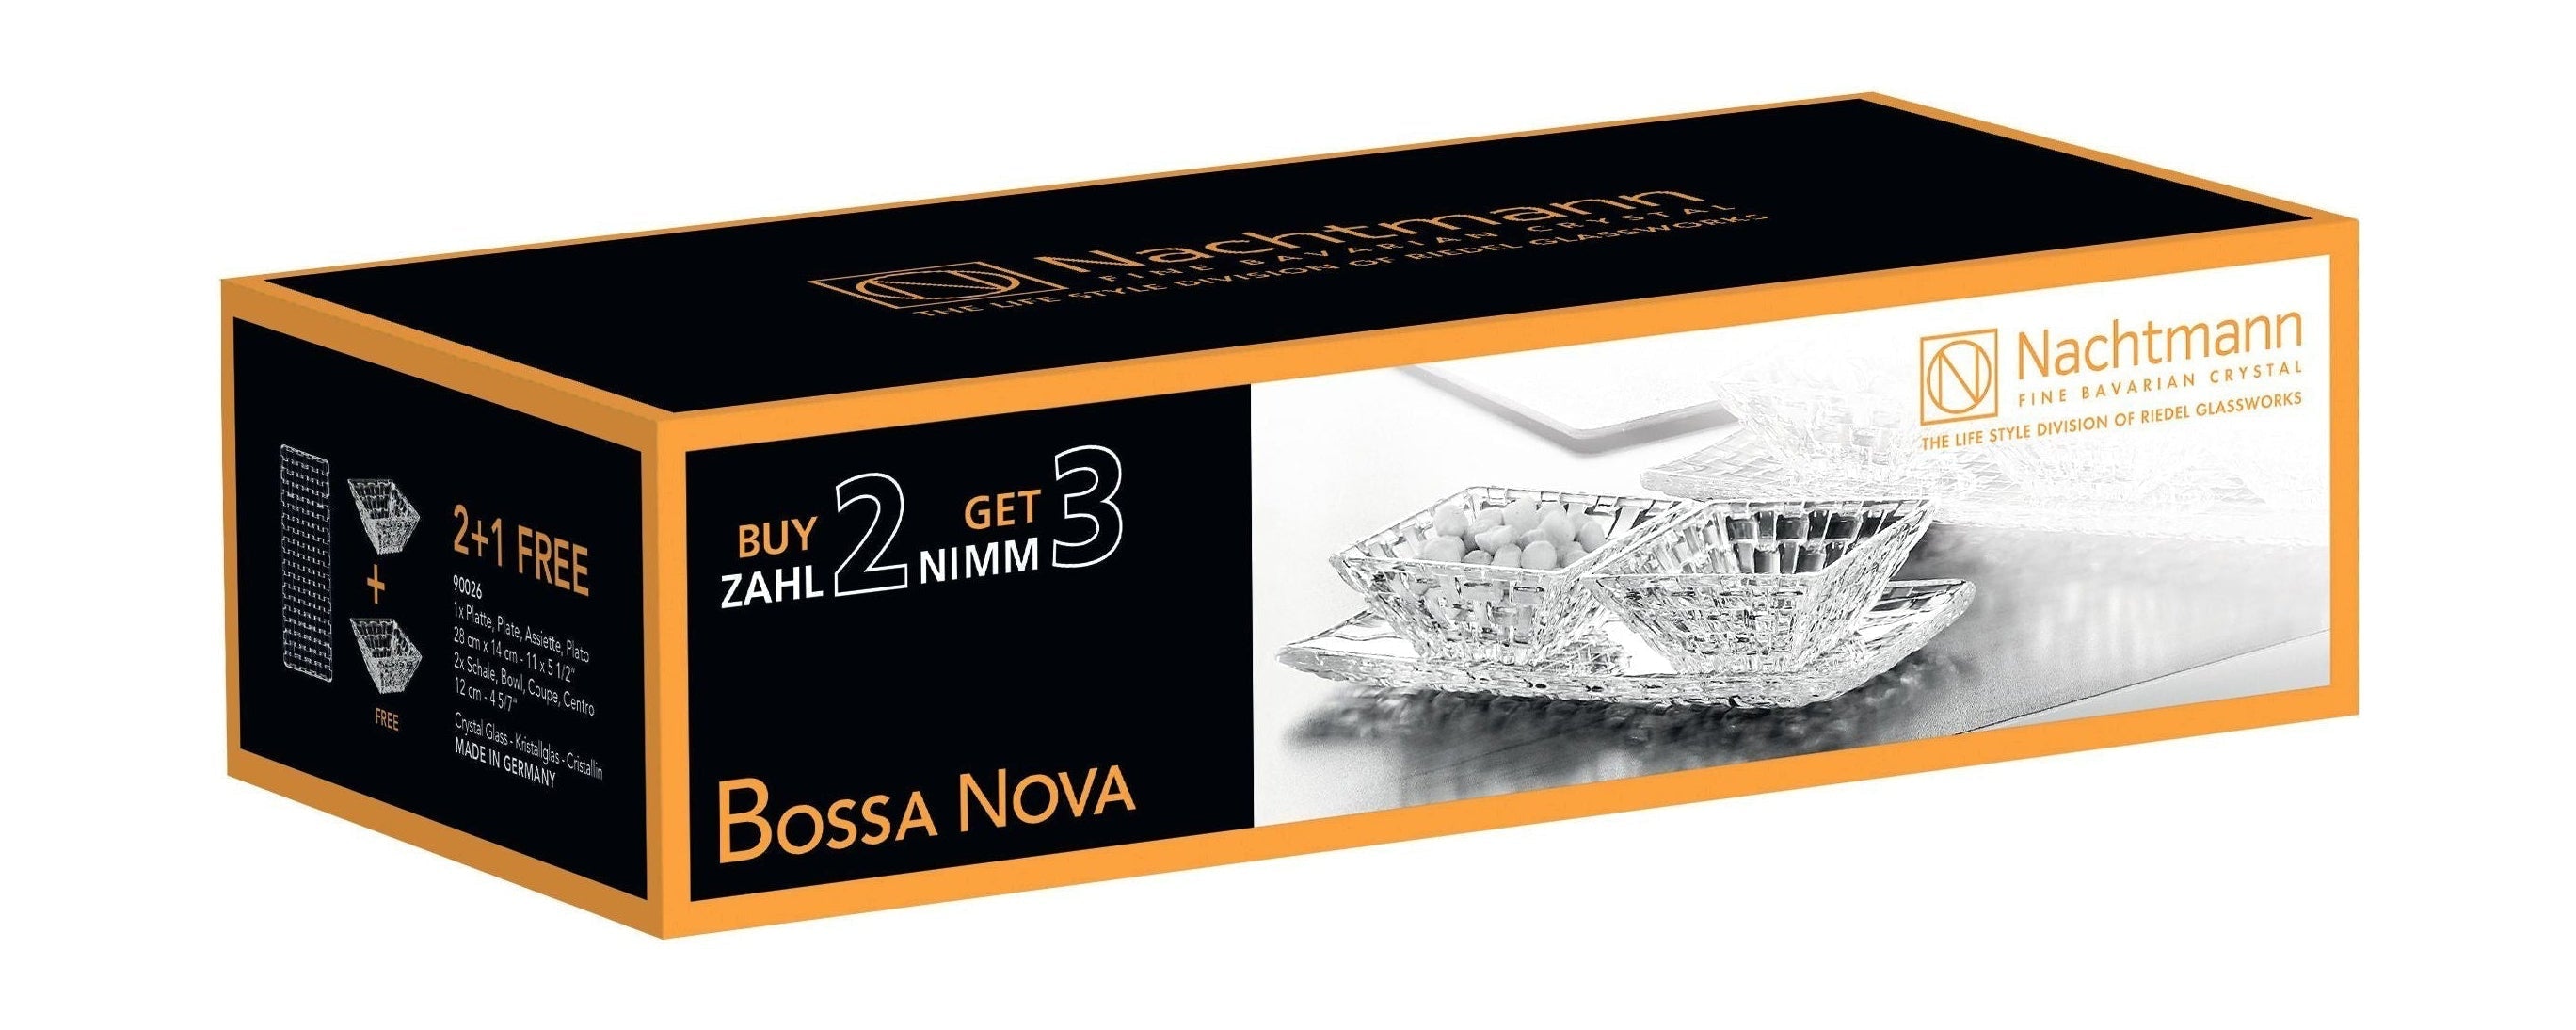 Nachtmann Bossa Nova Crystal Bowls Serving Kit, 3 st.